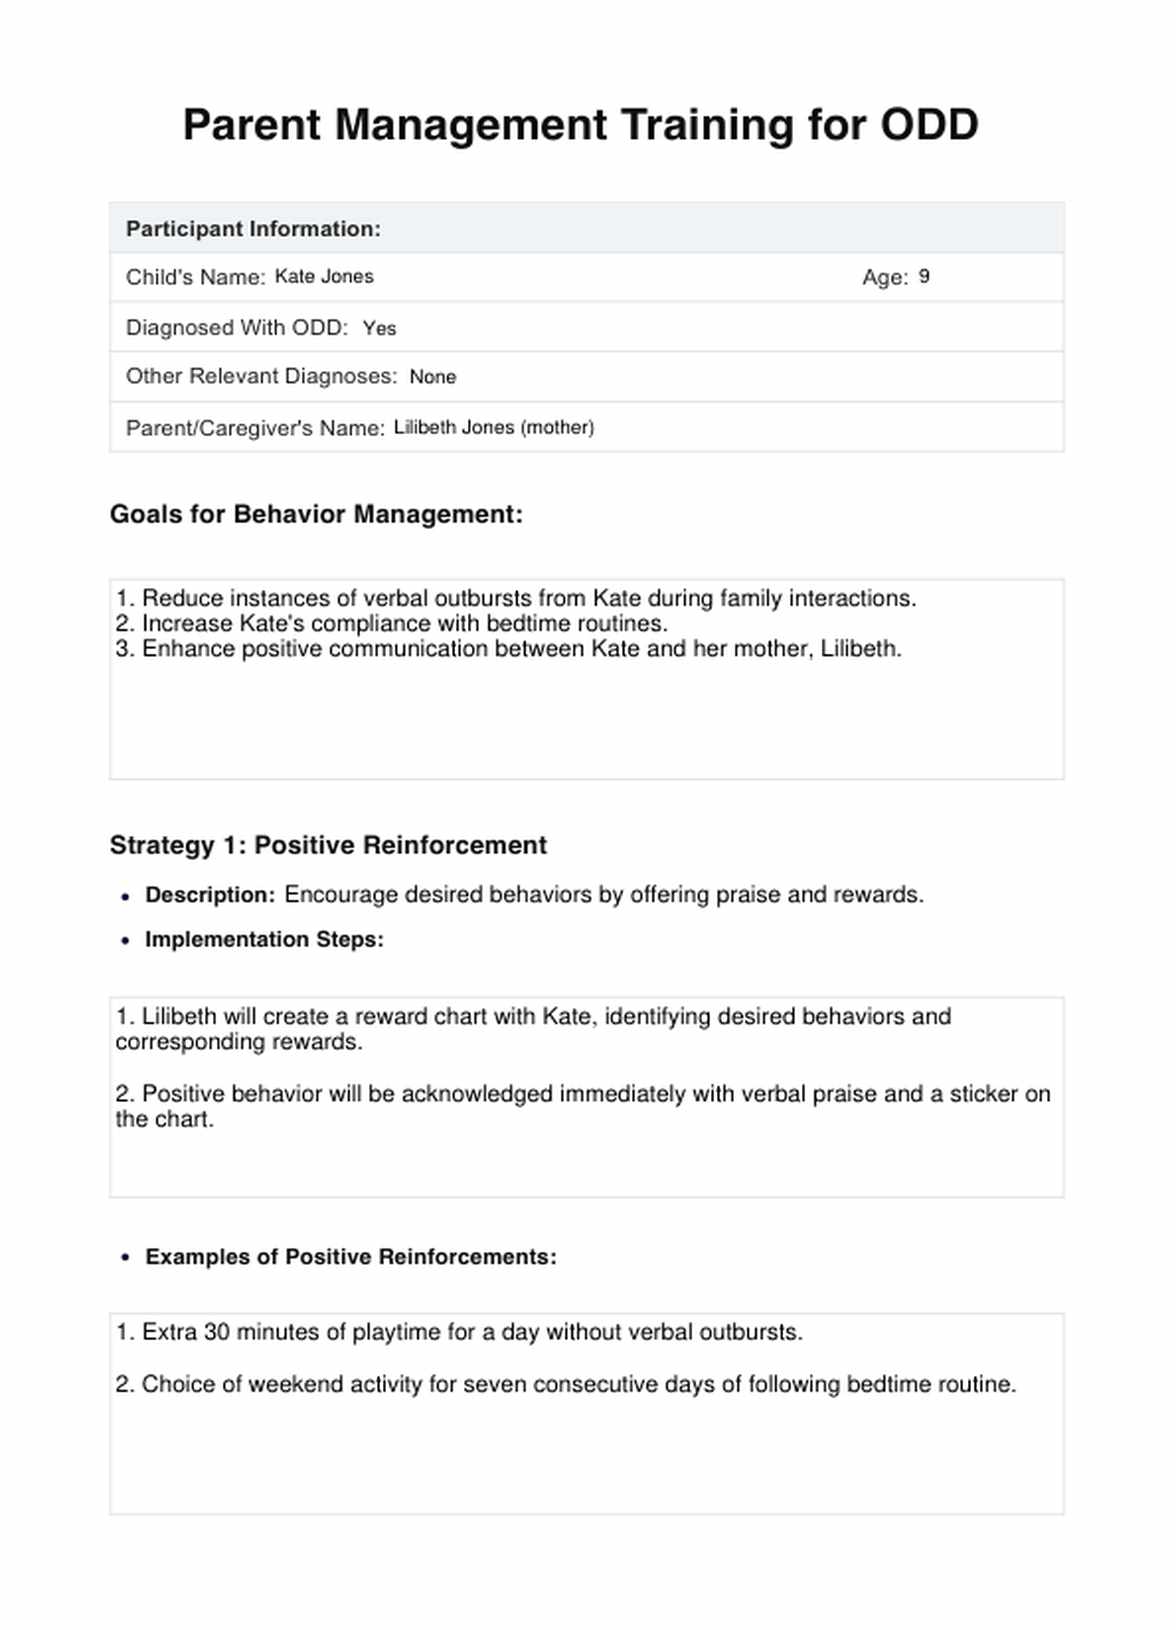 Parent Management Training for ODD PDF Example